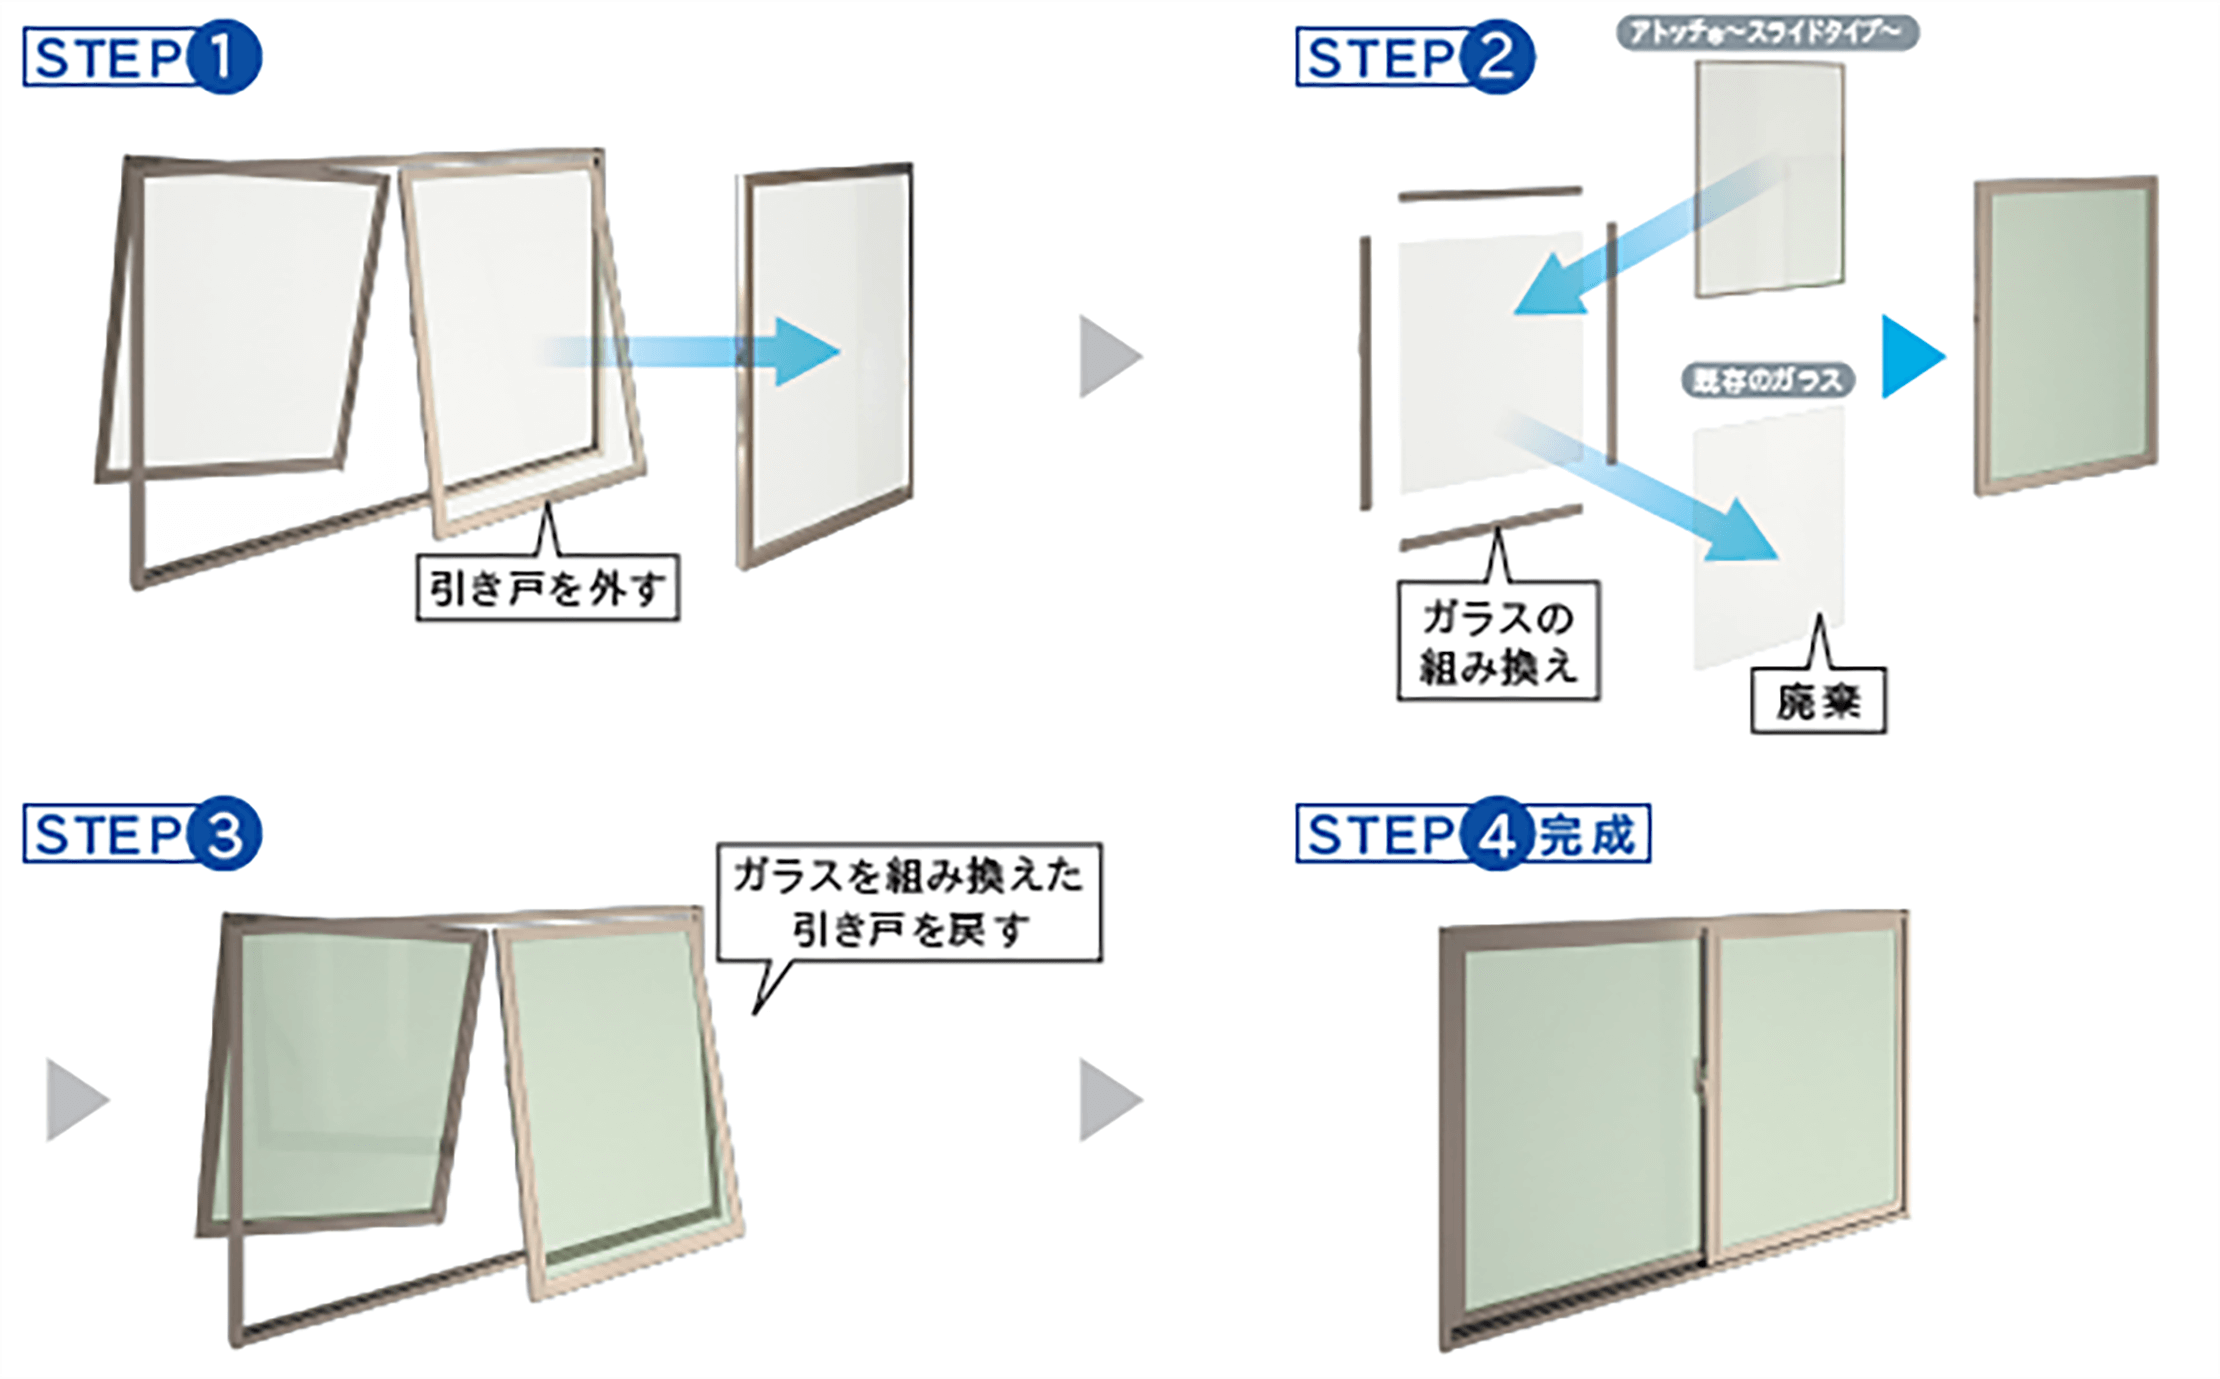 図：STEP1,STEP2,STEP3,STEP4